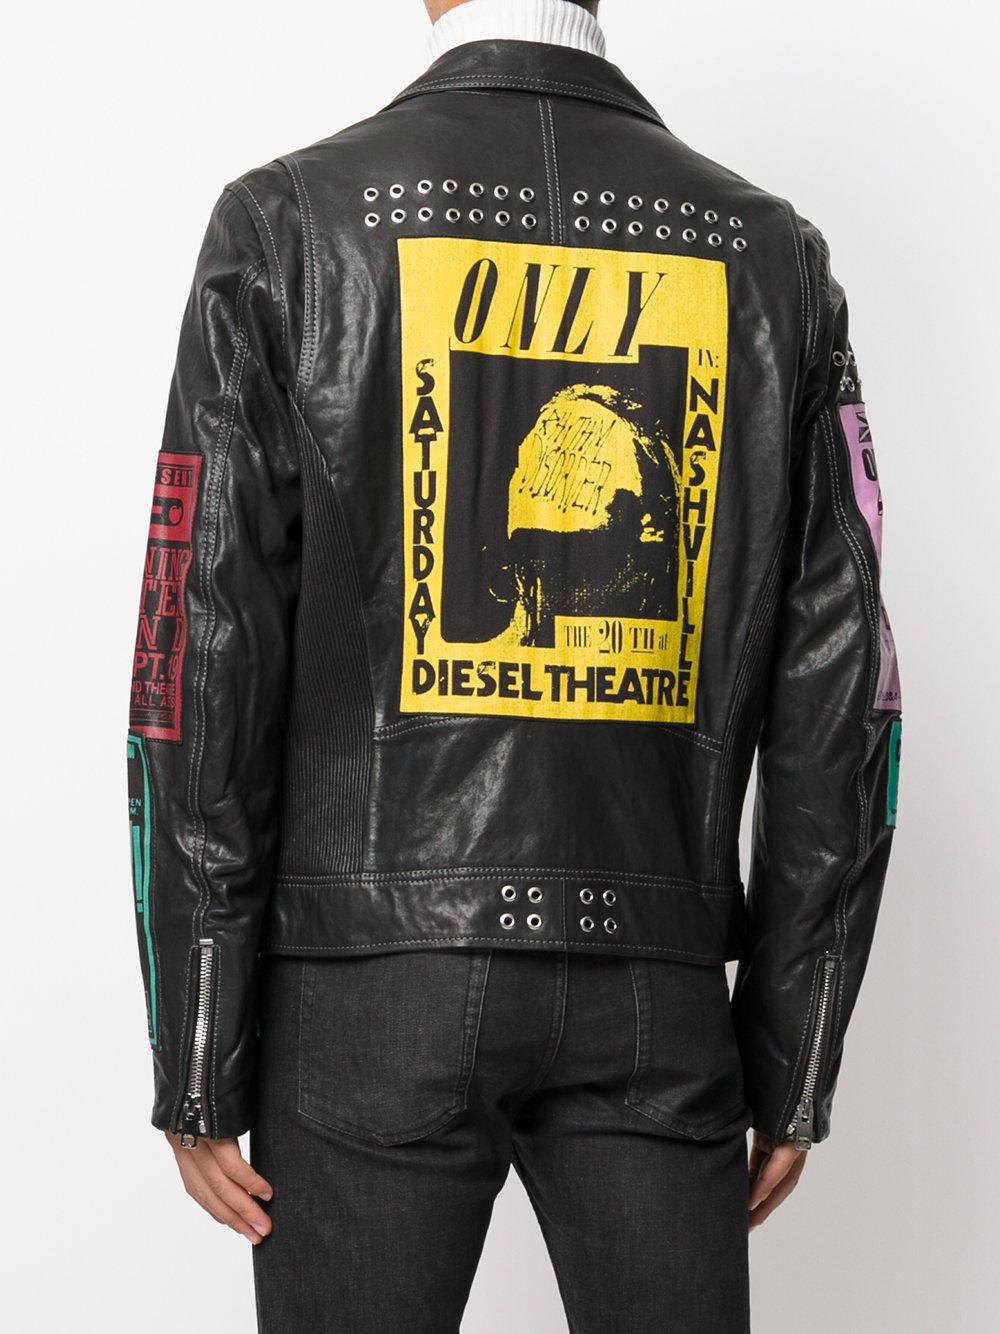 DIESEL Cotton Multi-patches Biker Jacket in Black for Men | Lyst